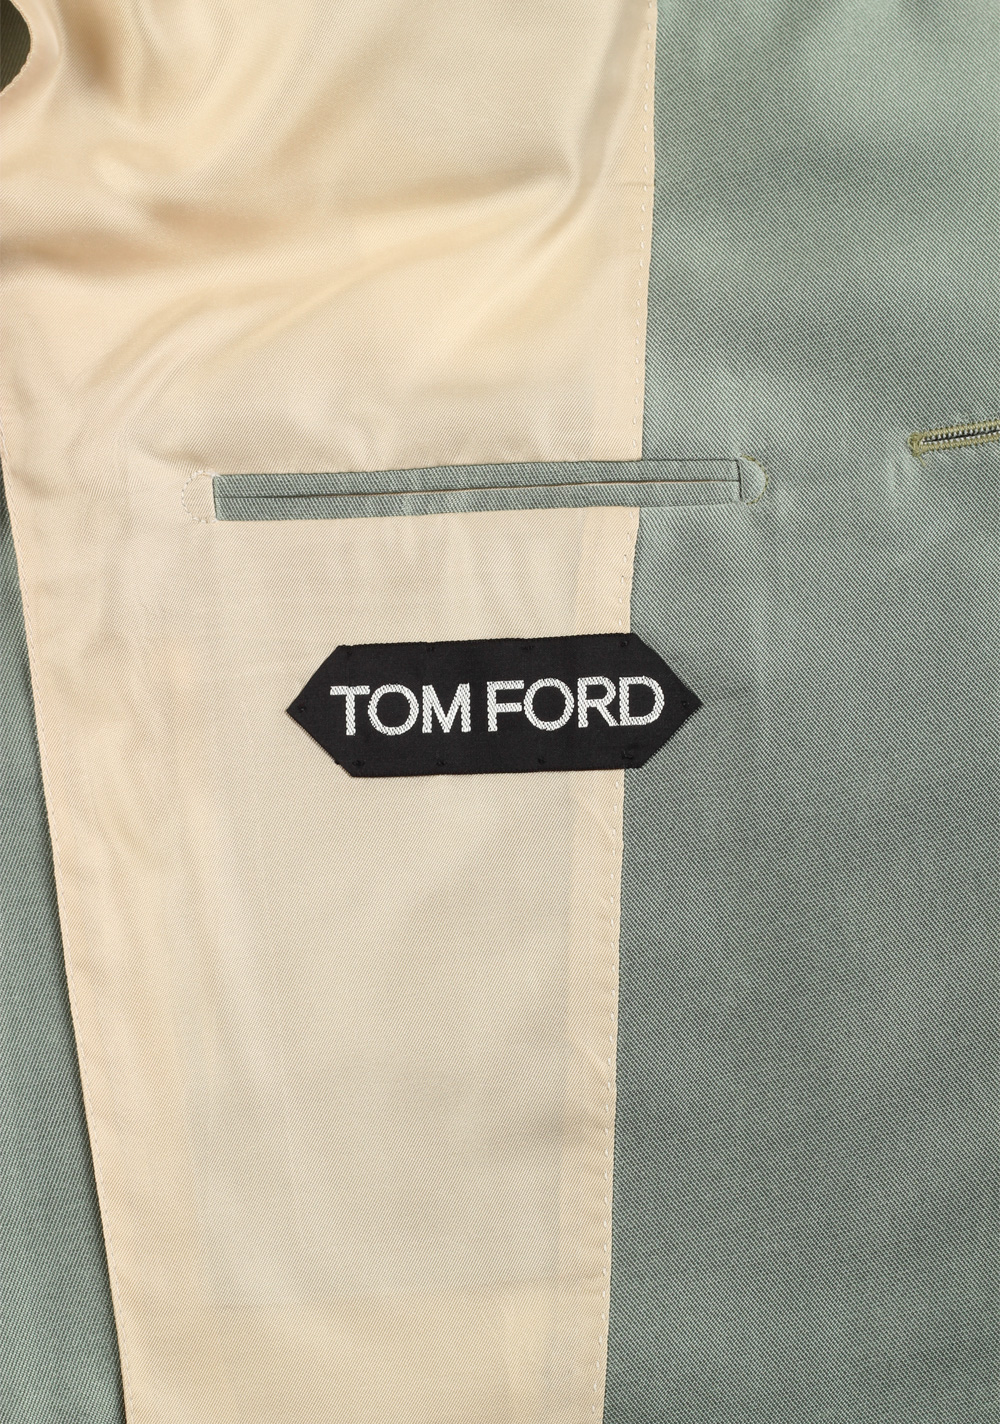 TOM FORD Atticus Green Silk Suit Size 46 / 36R U.S. | Costume Limité